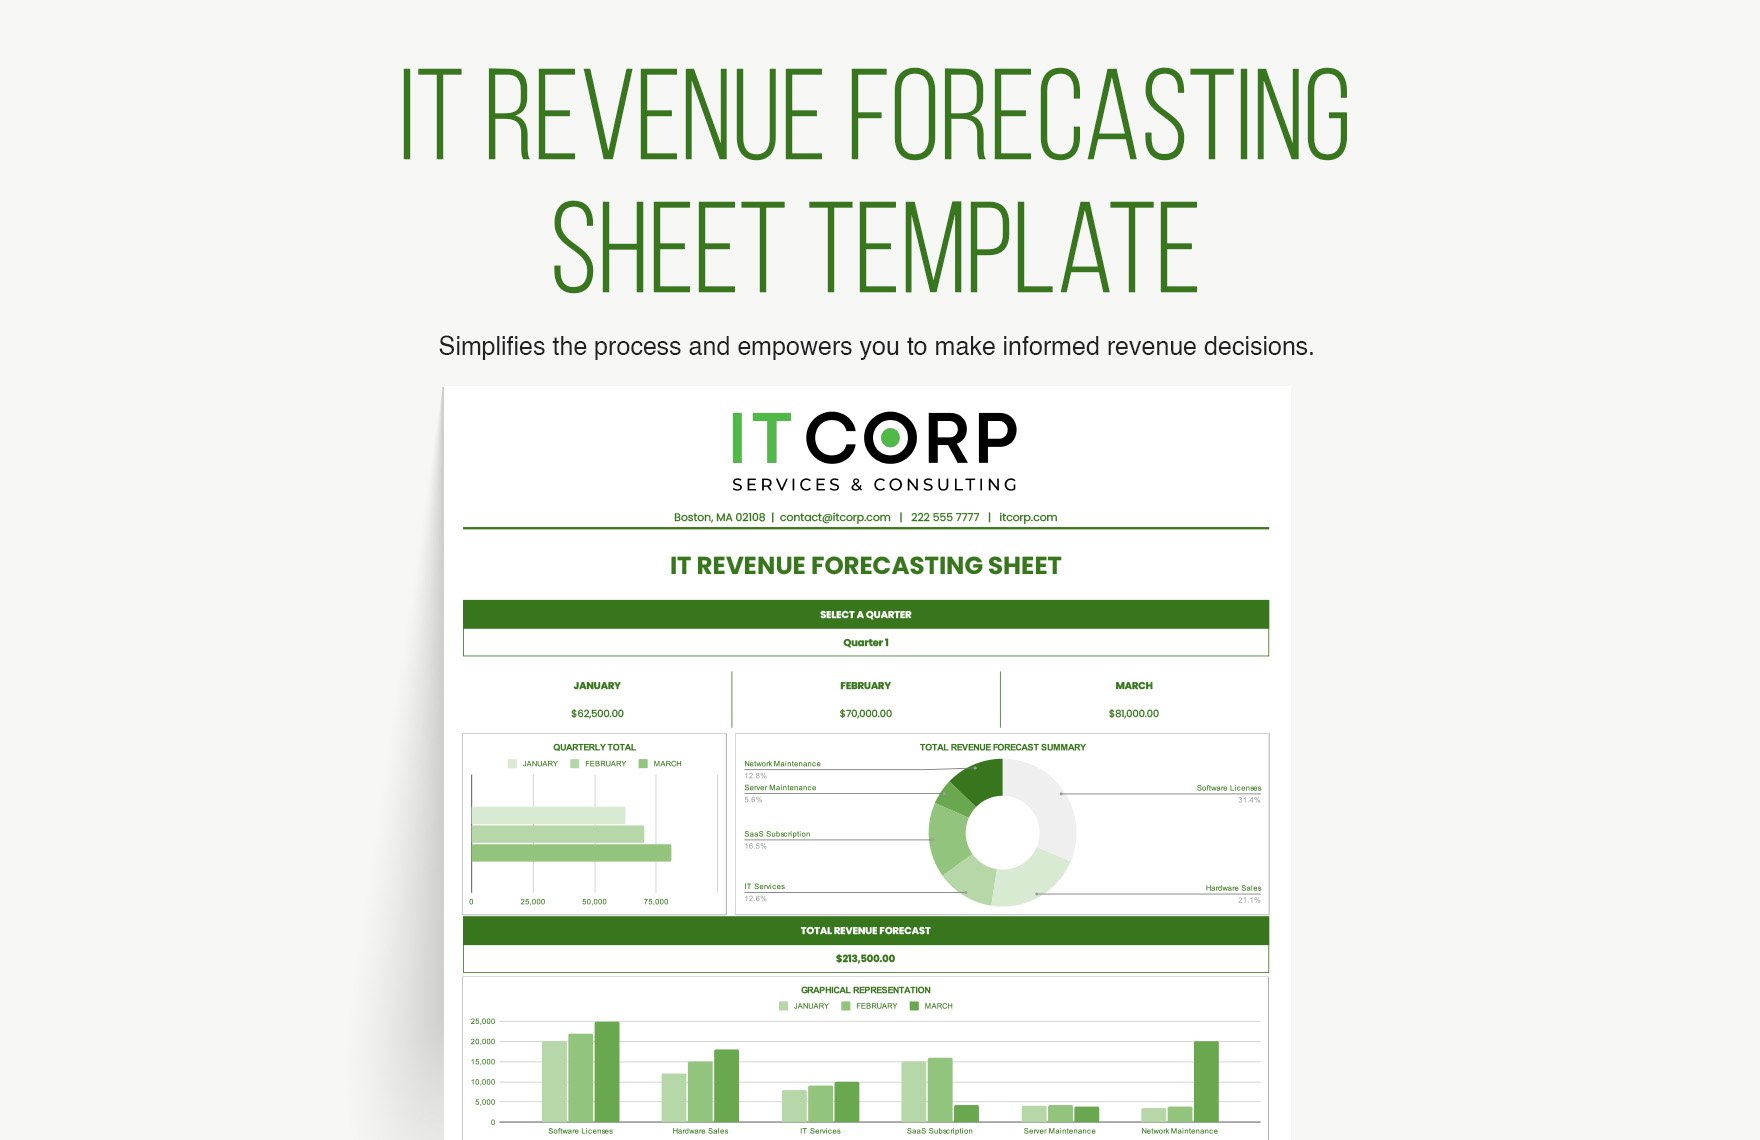 IT Revenue Forecasting Sheet Template